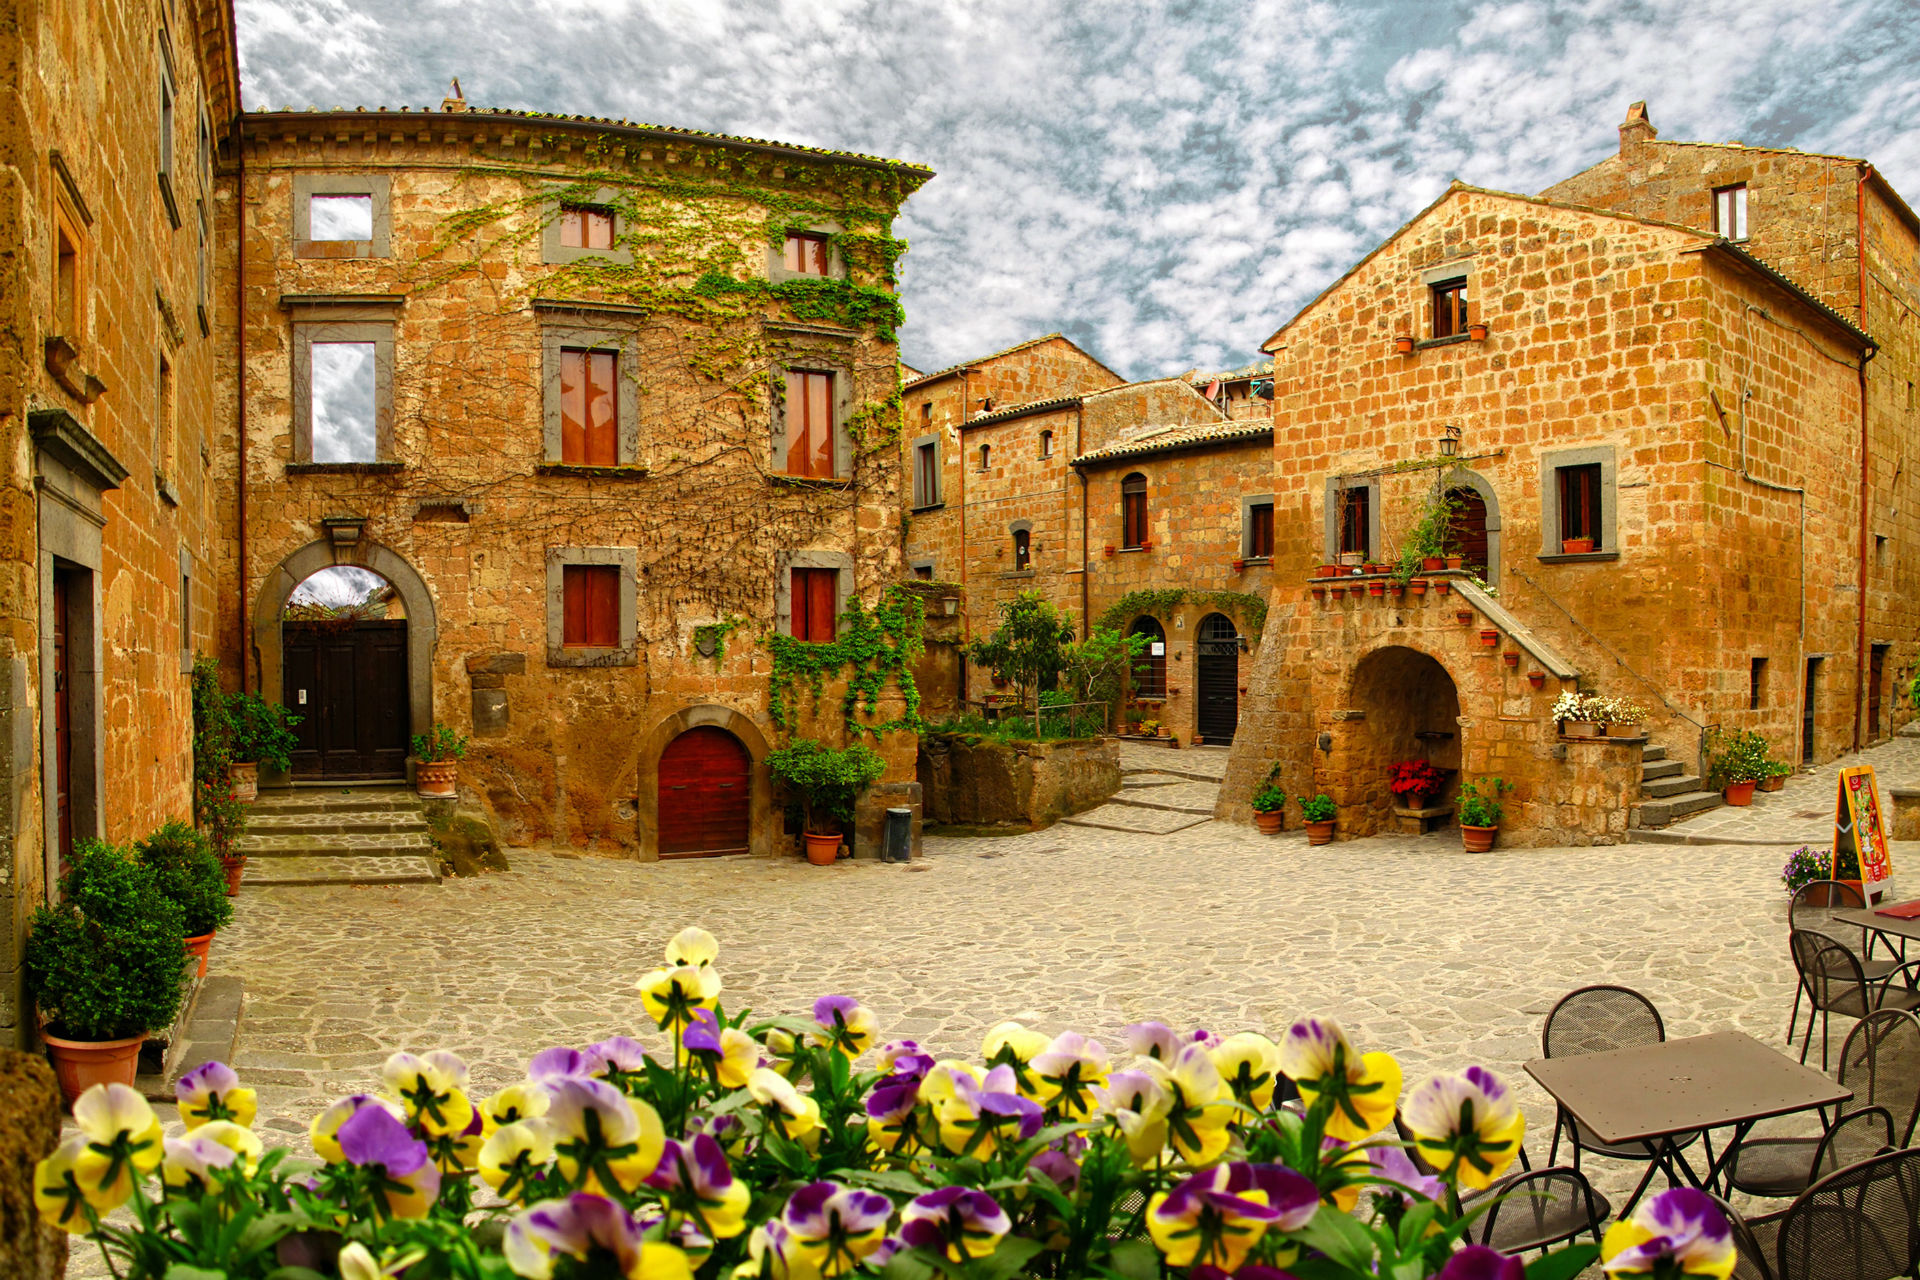 Civita di Bagnoregio is a town in the Province of Viterbo in Central Italy